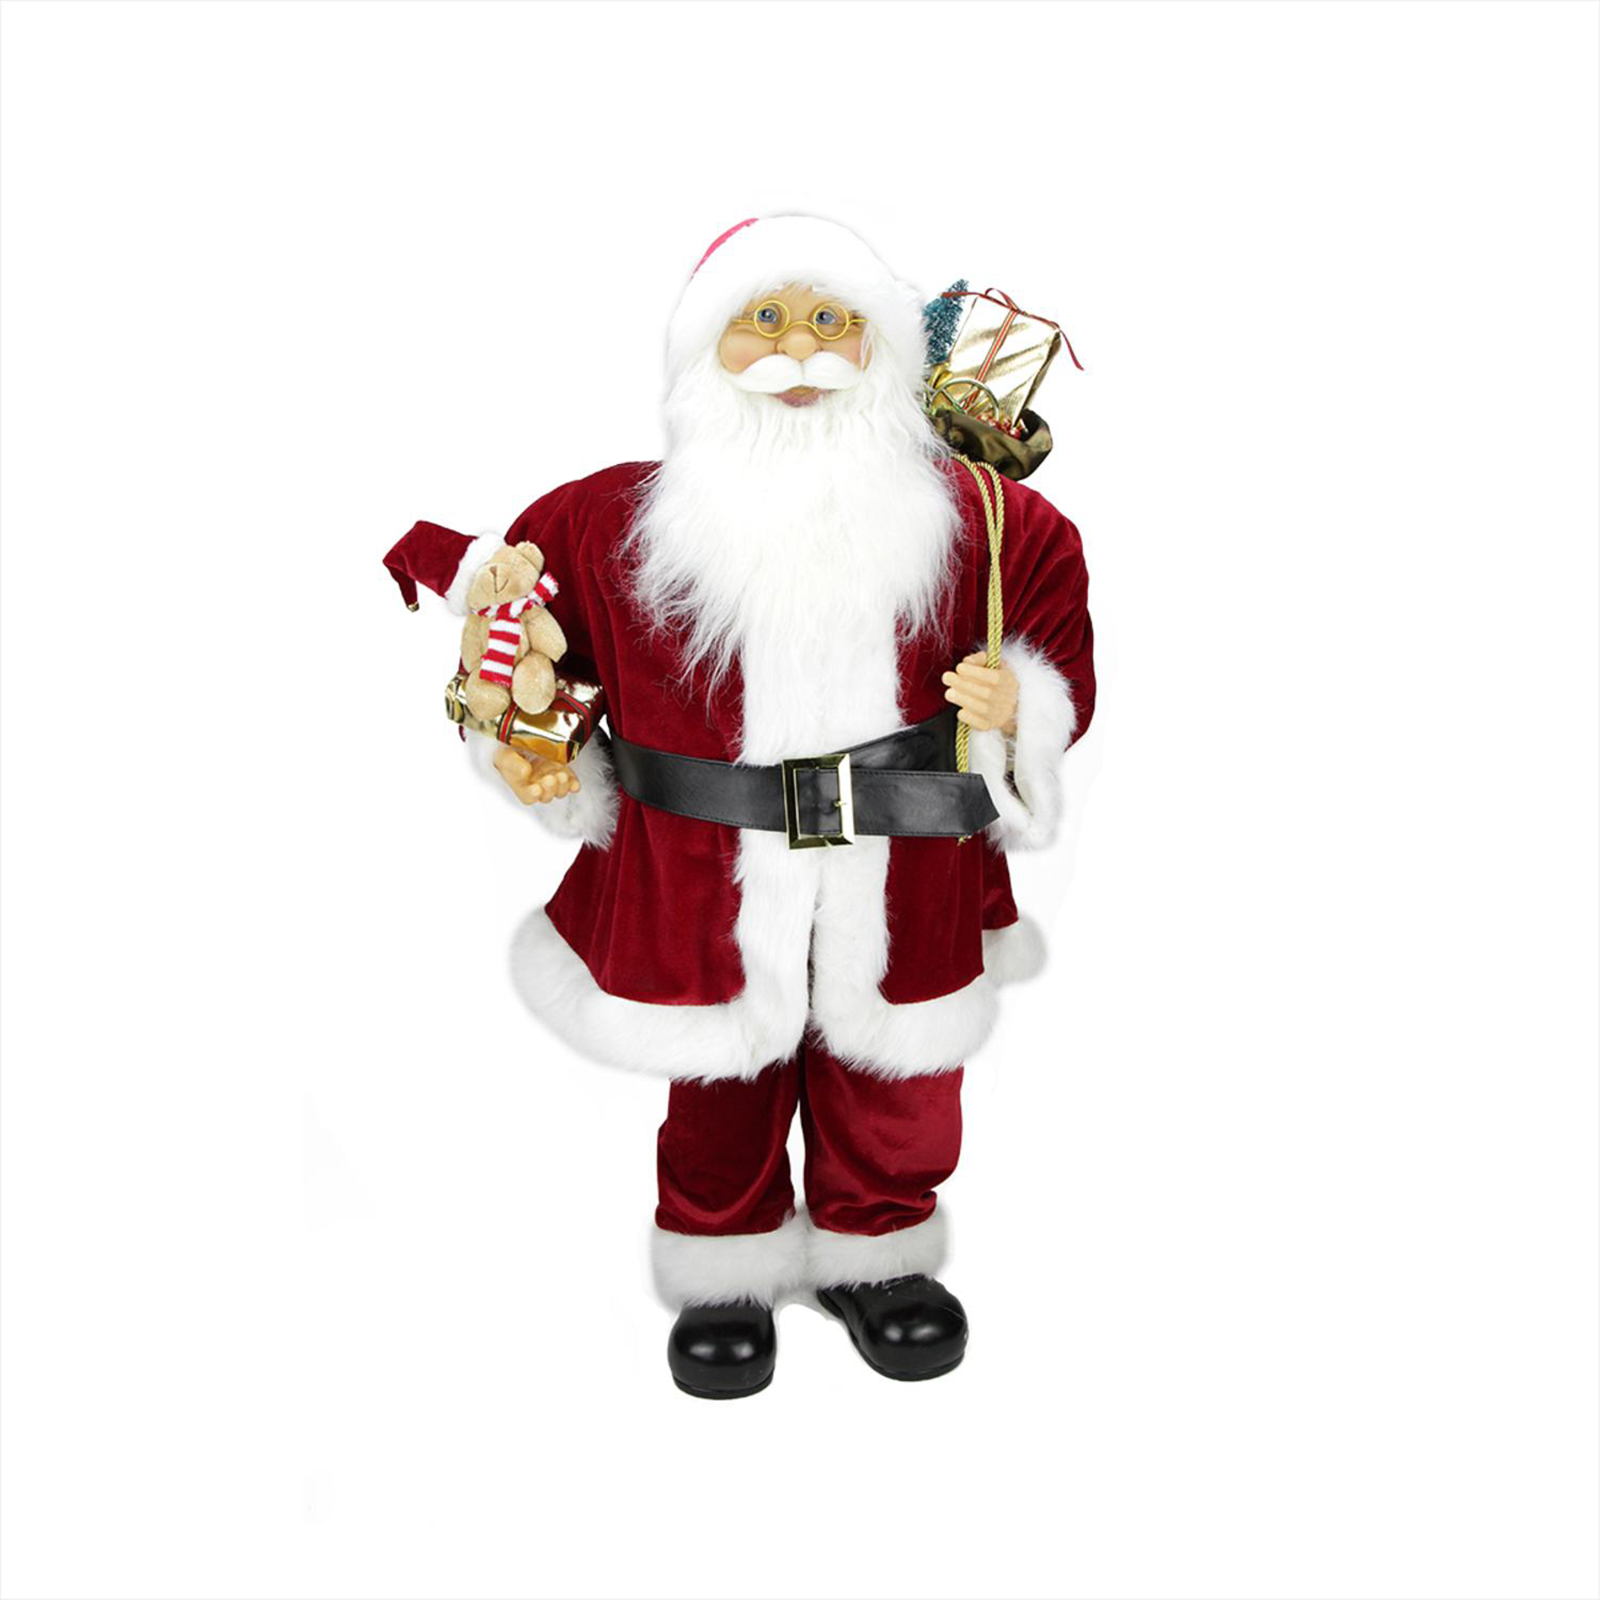 Northlight 36" Standing Santa Claus Xmas Figure - Red/White